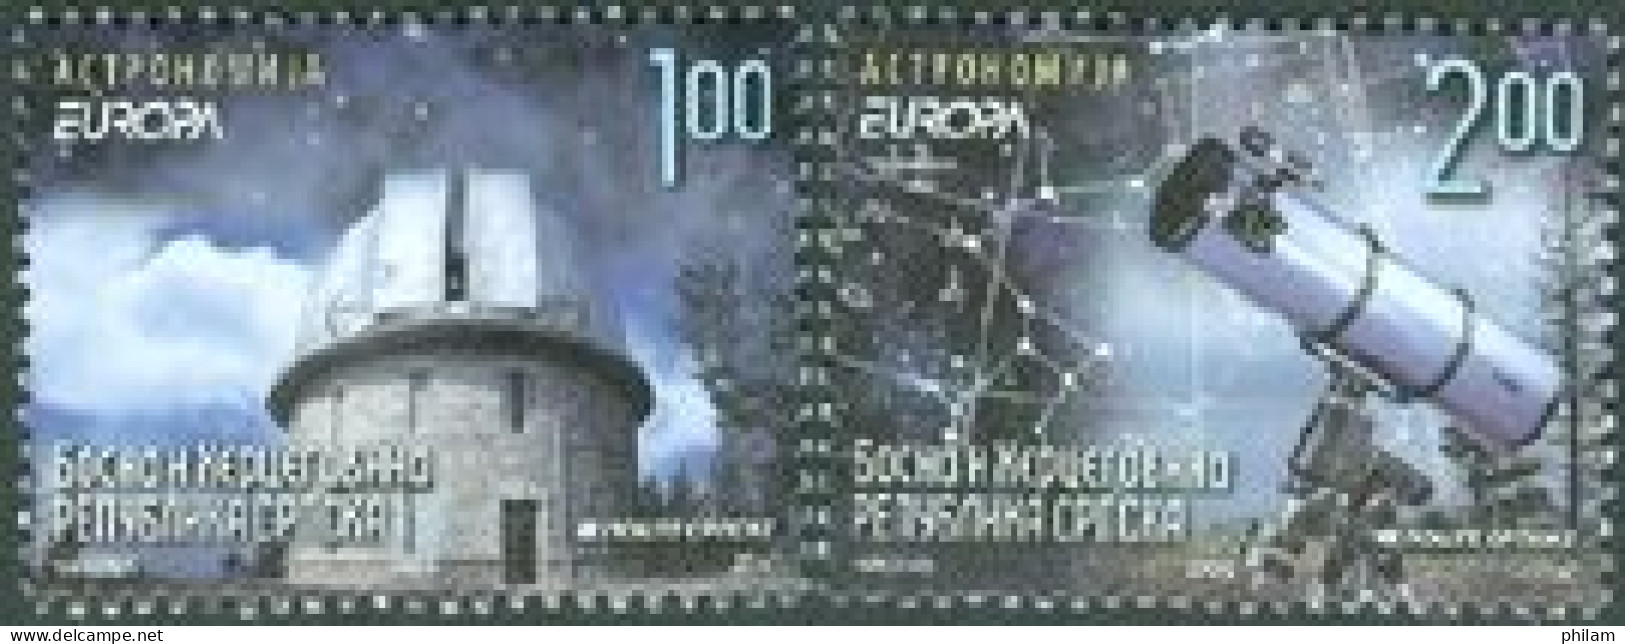 BOSNIE SERBE - 2009 - Europa - L'astronomie - 2 V.  - 2009